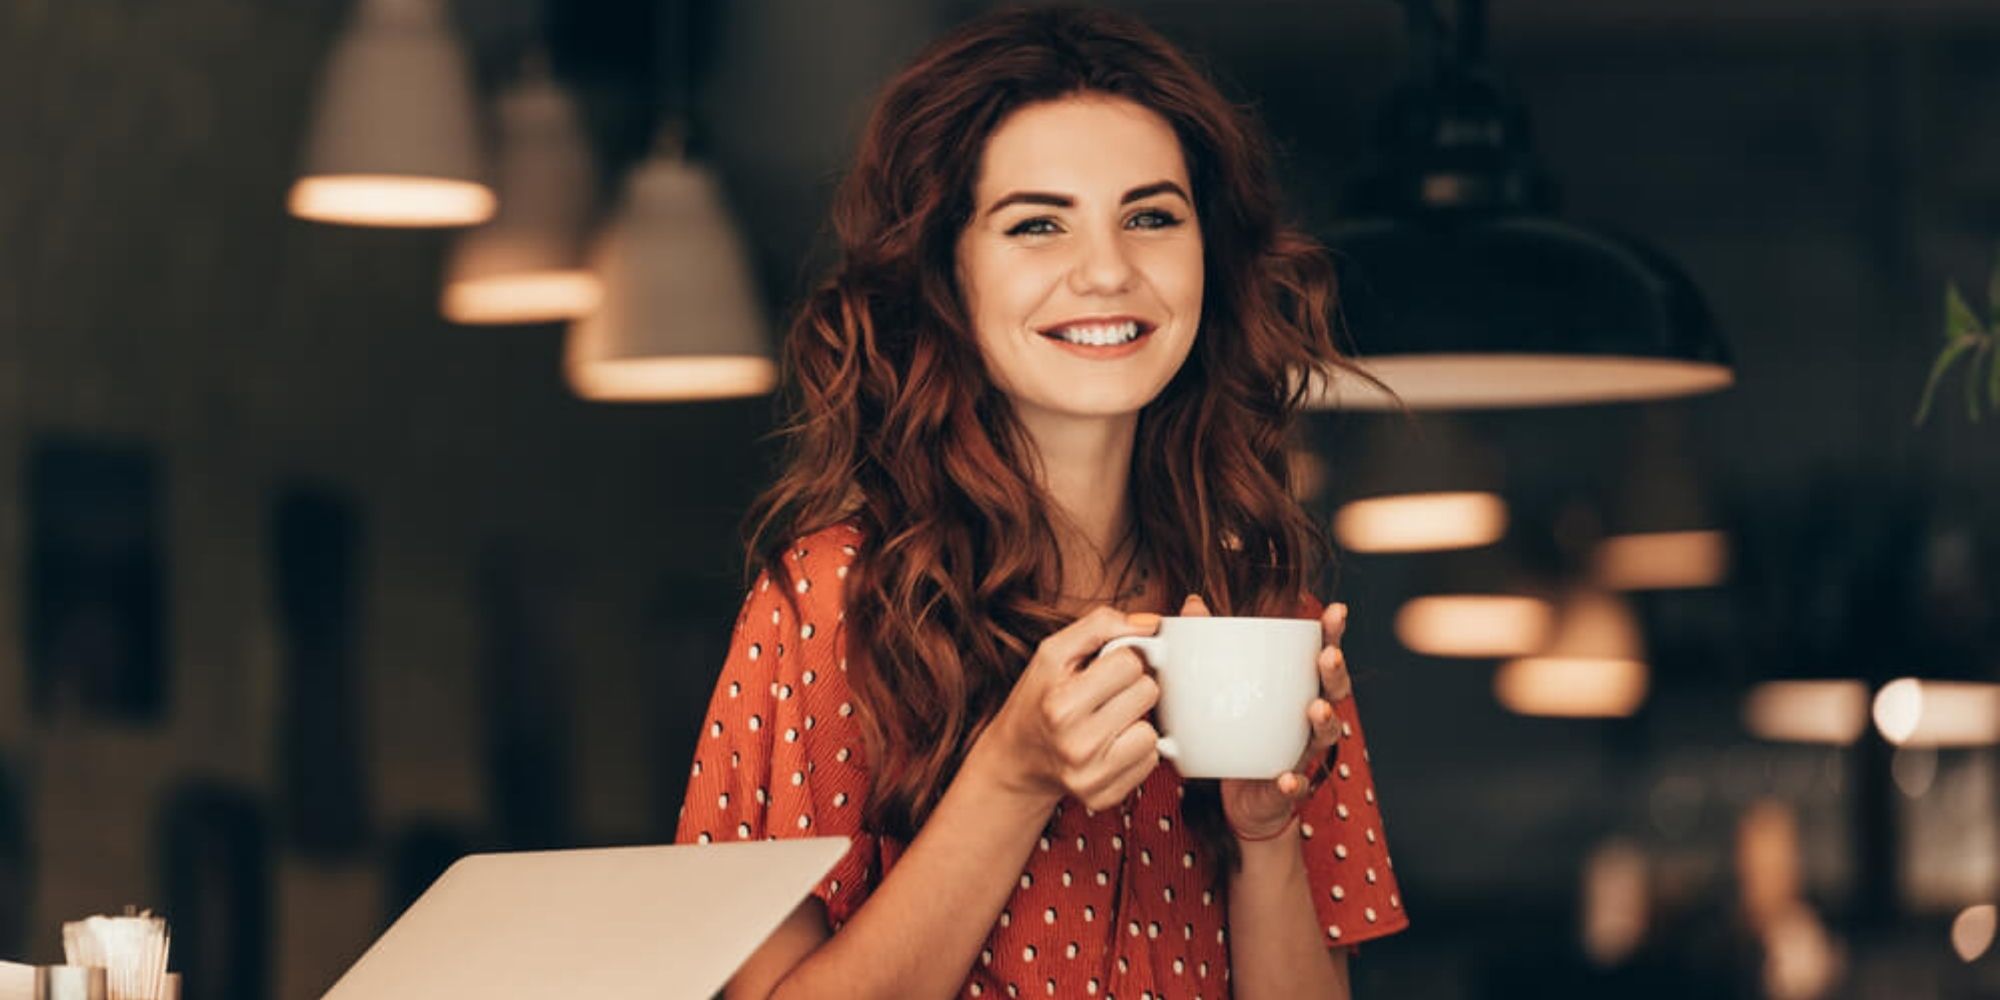 Woman at coffee shop holding a white mug next to a laptop.